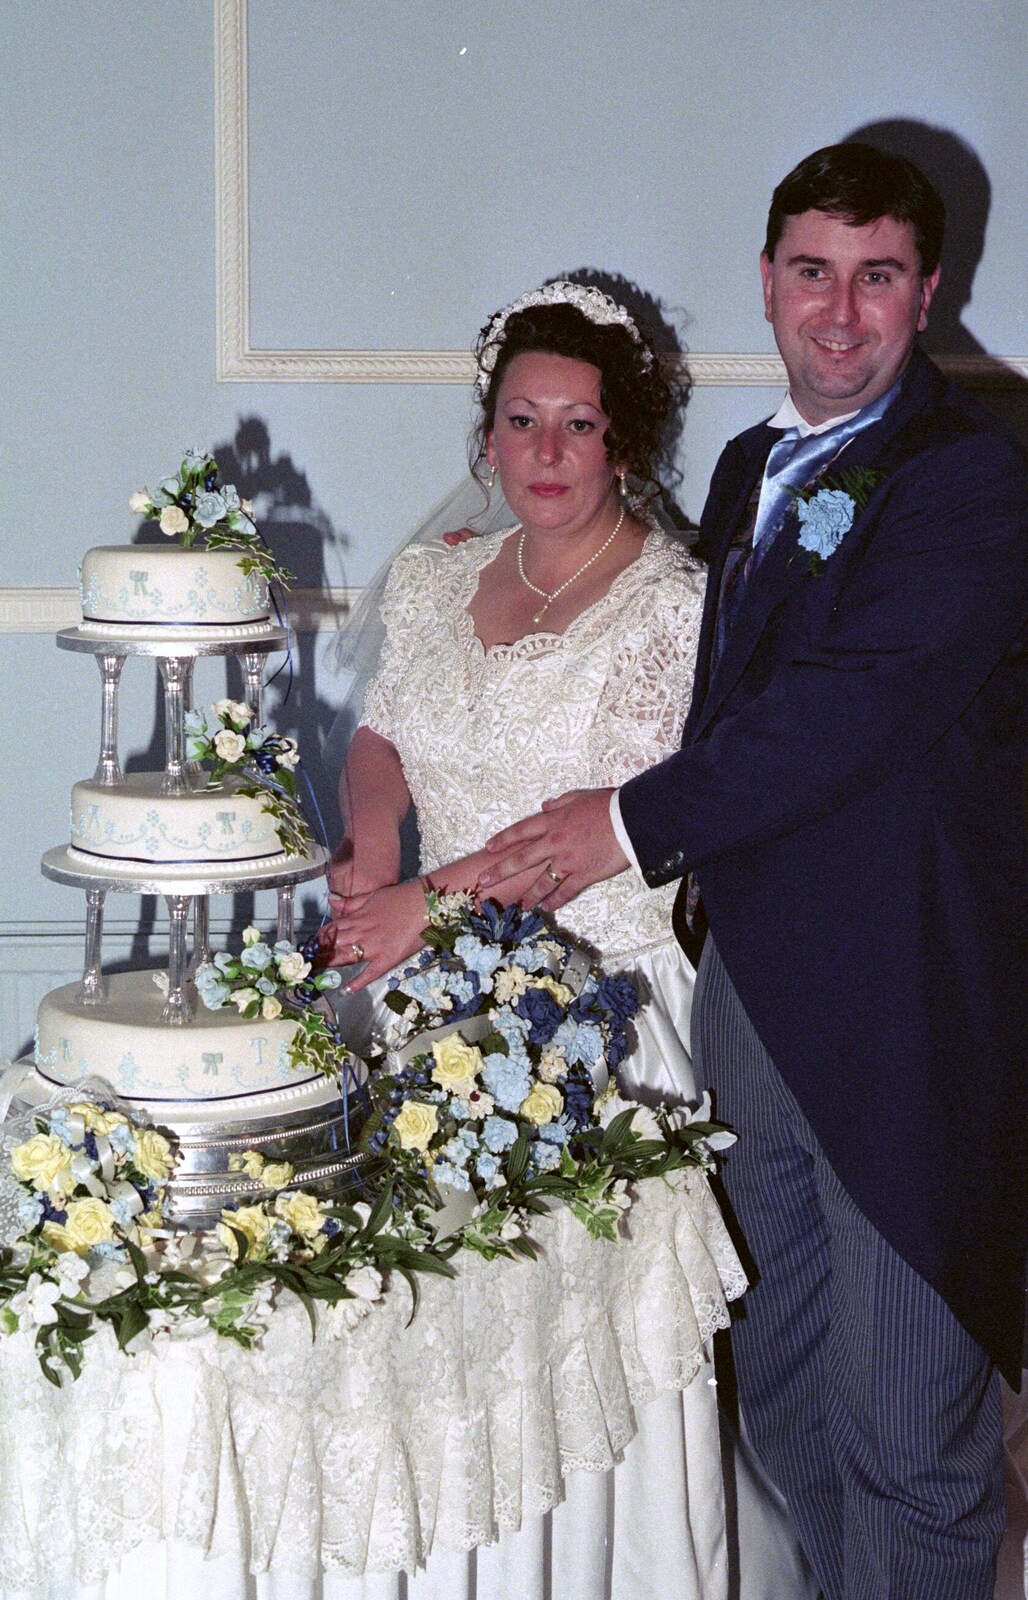 Riki's Wedding, Treboeth, Swansea - 7th May 1996: Riki helps with the cake cutting